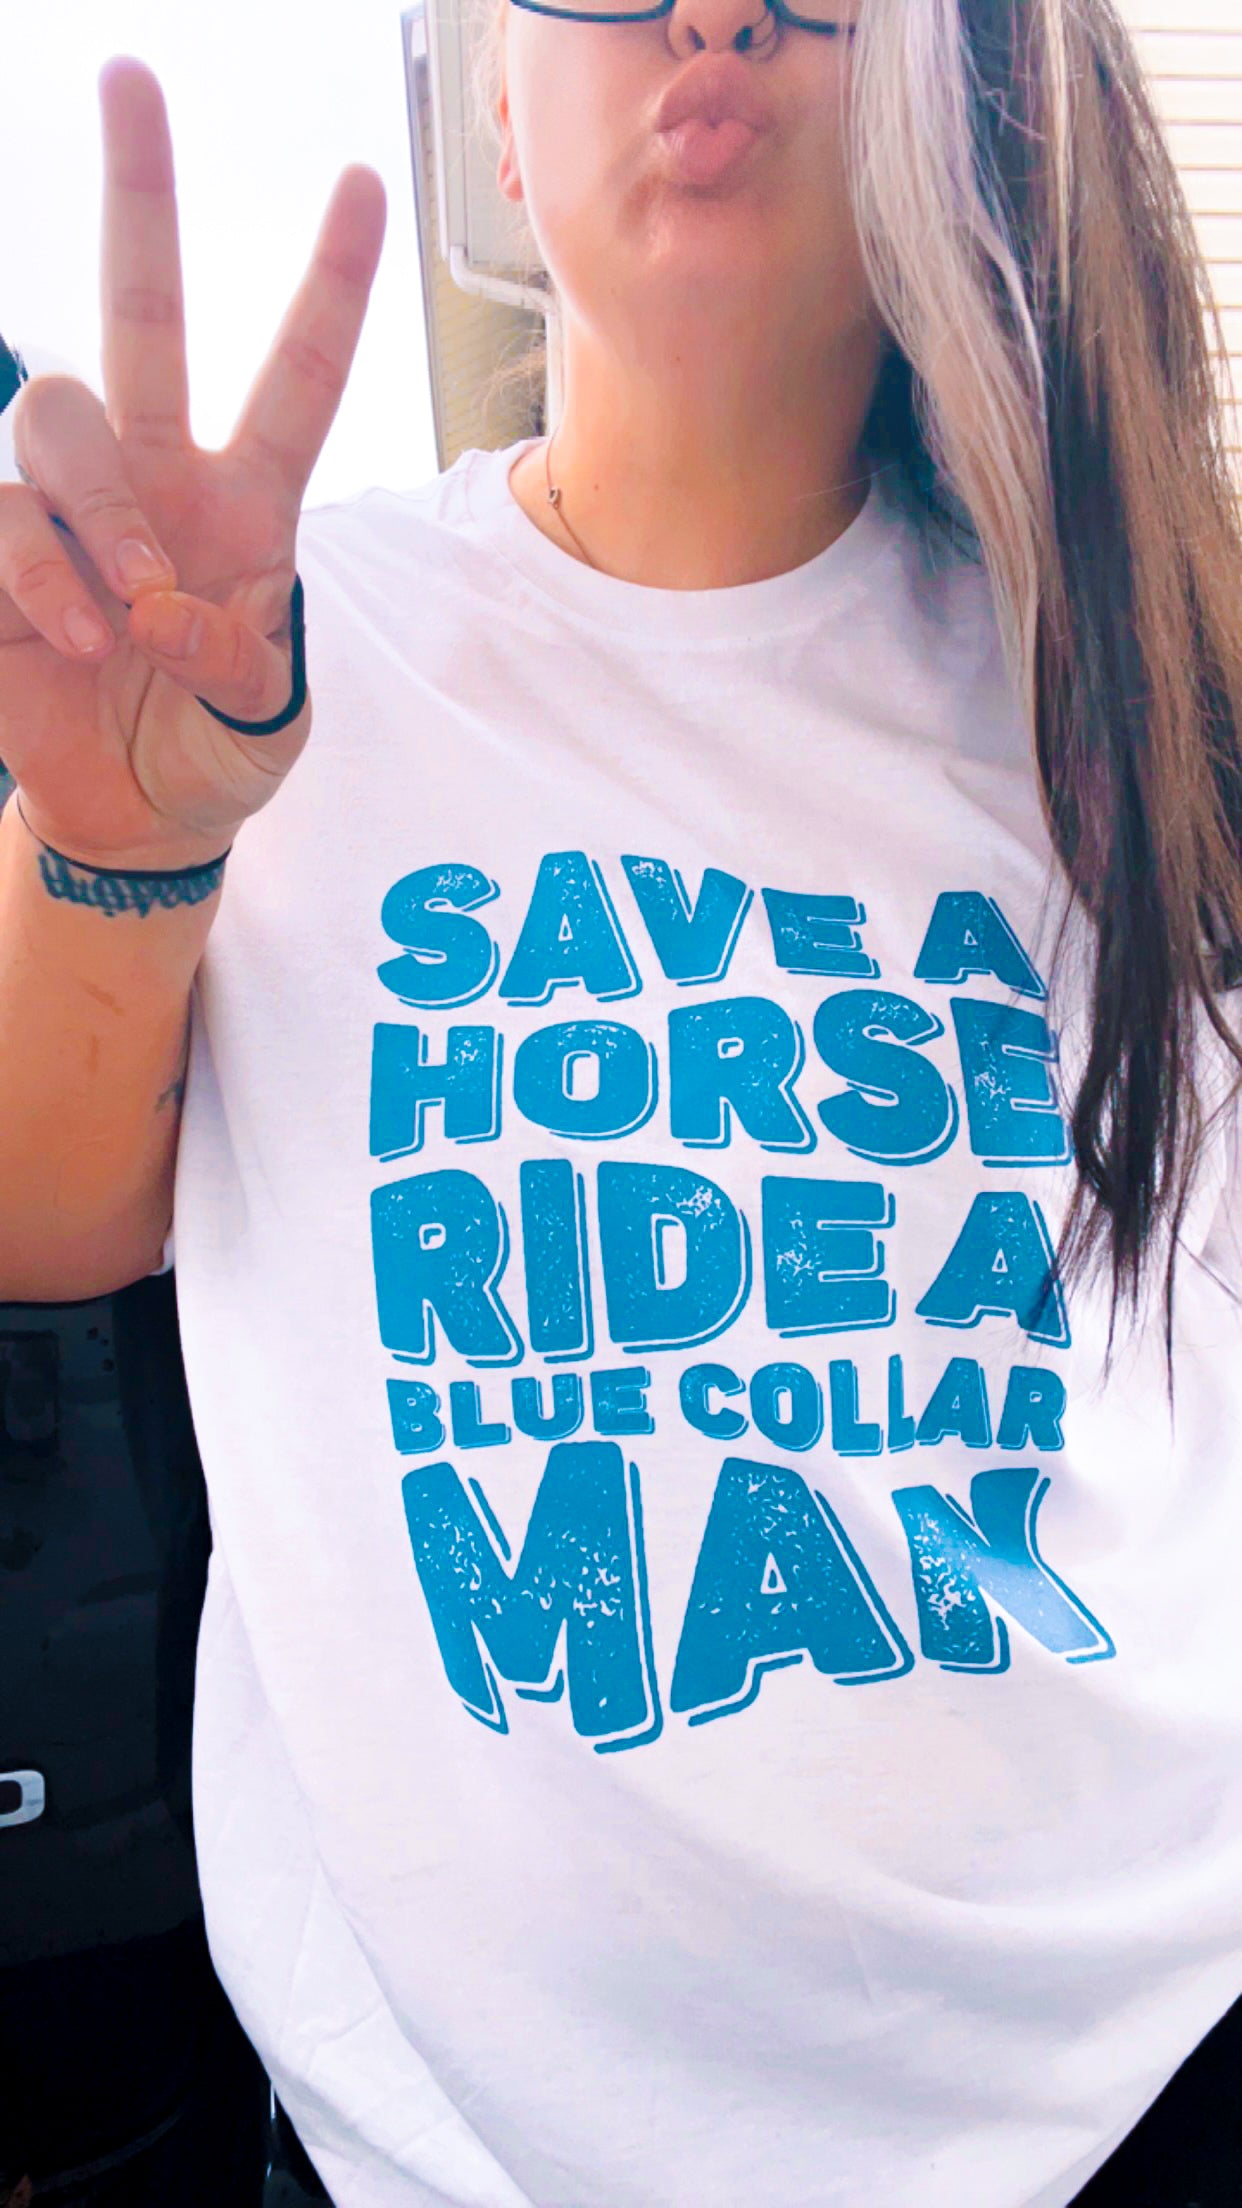 Save a Horse tee